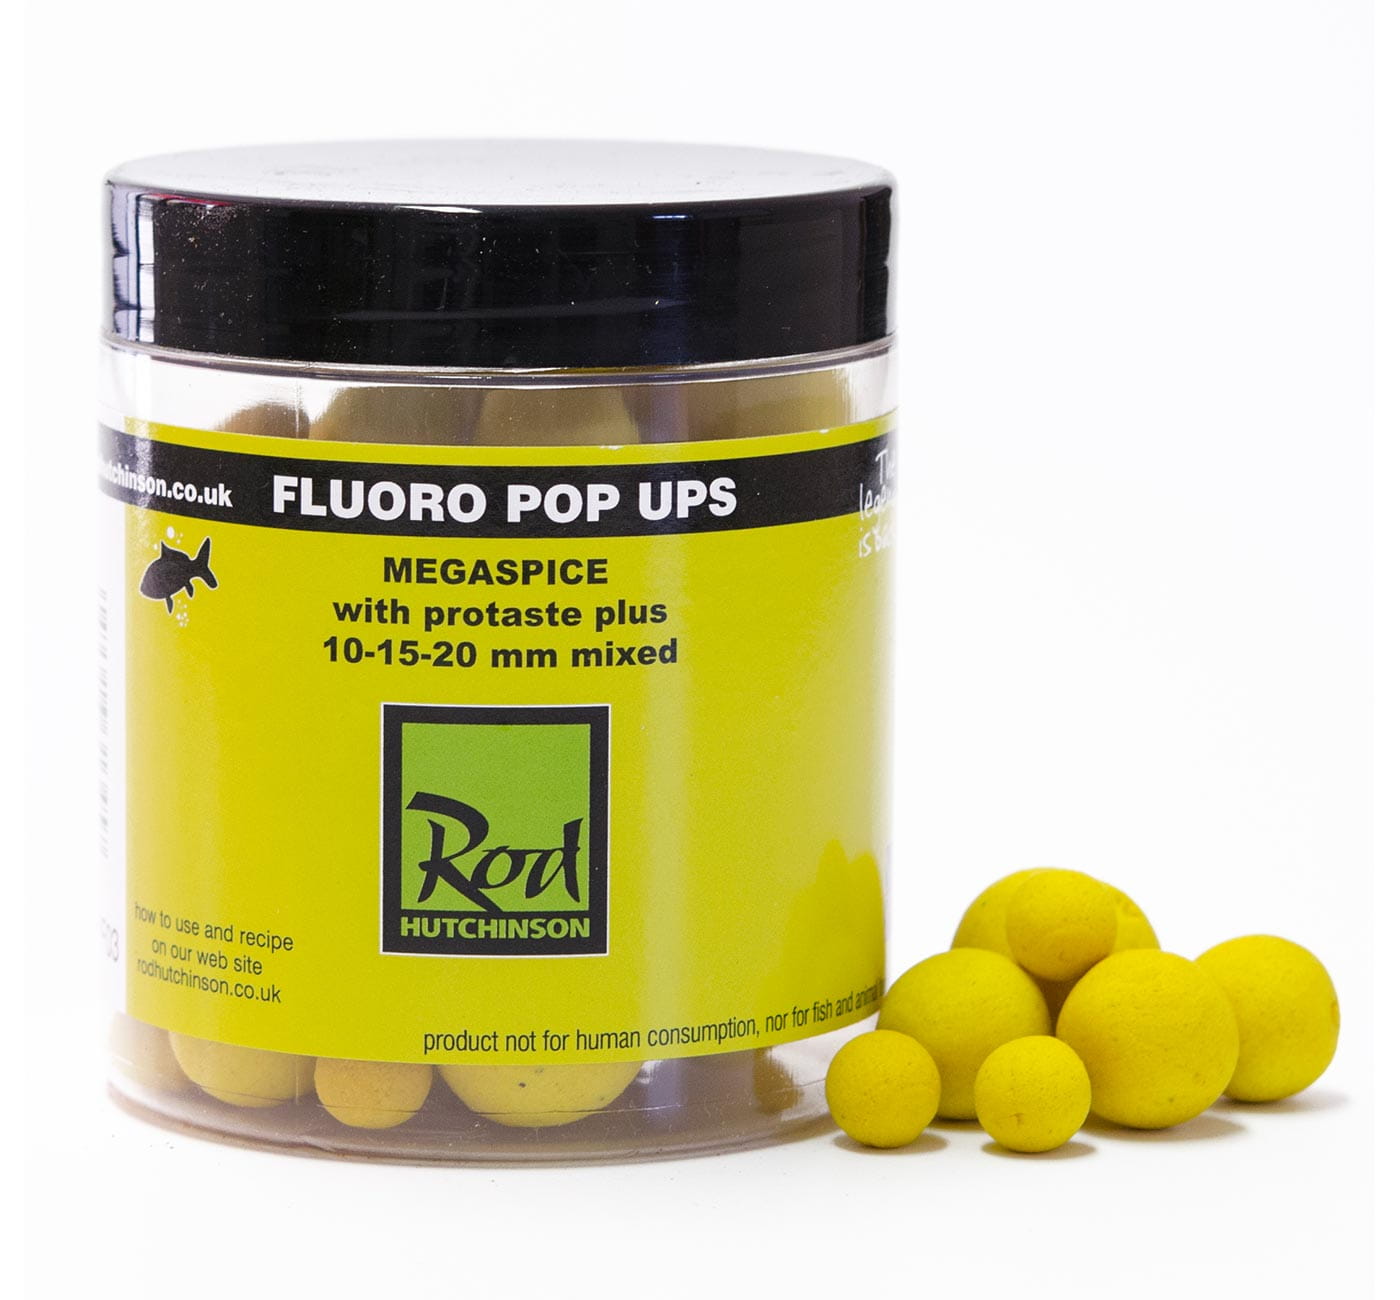 RH Fluoro Pop Ups Megaspice